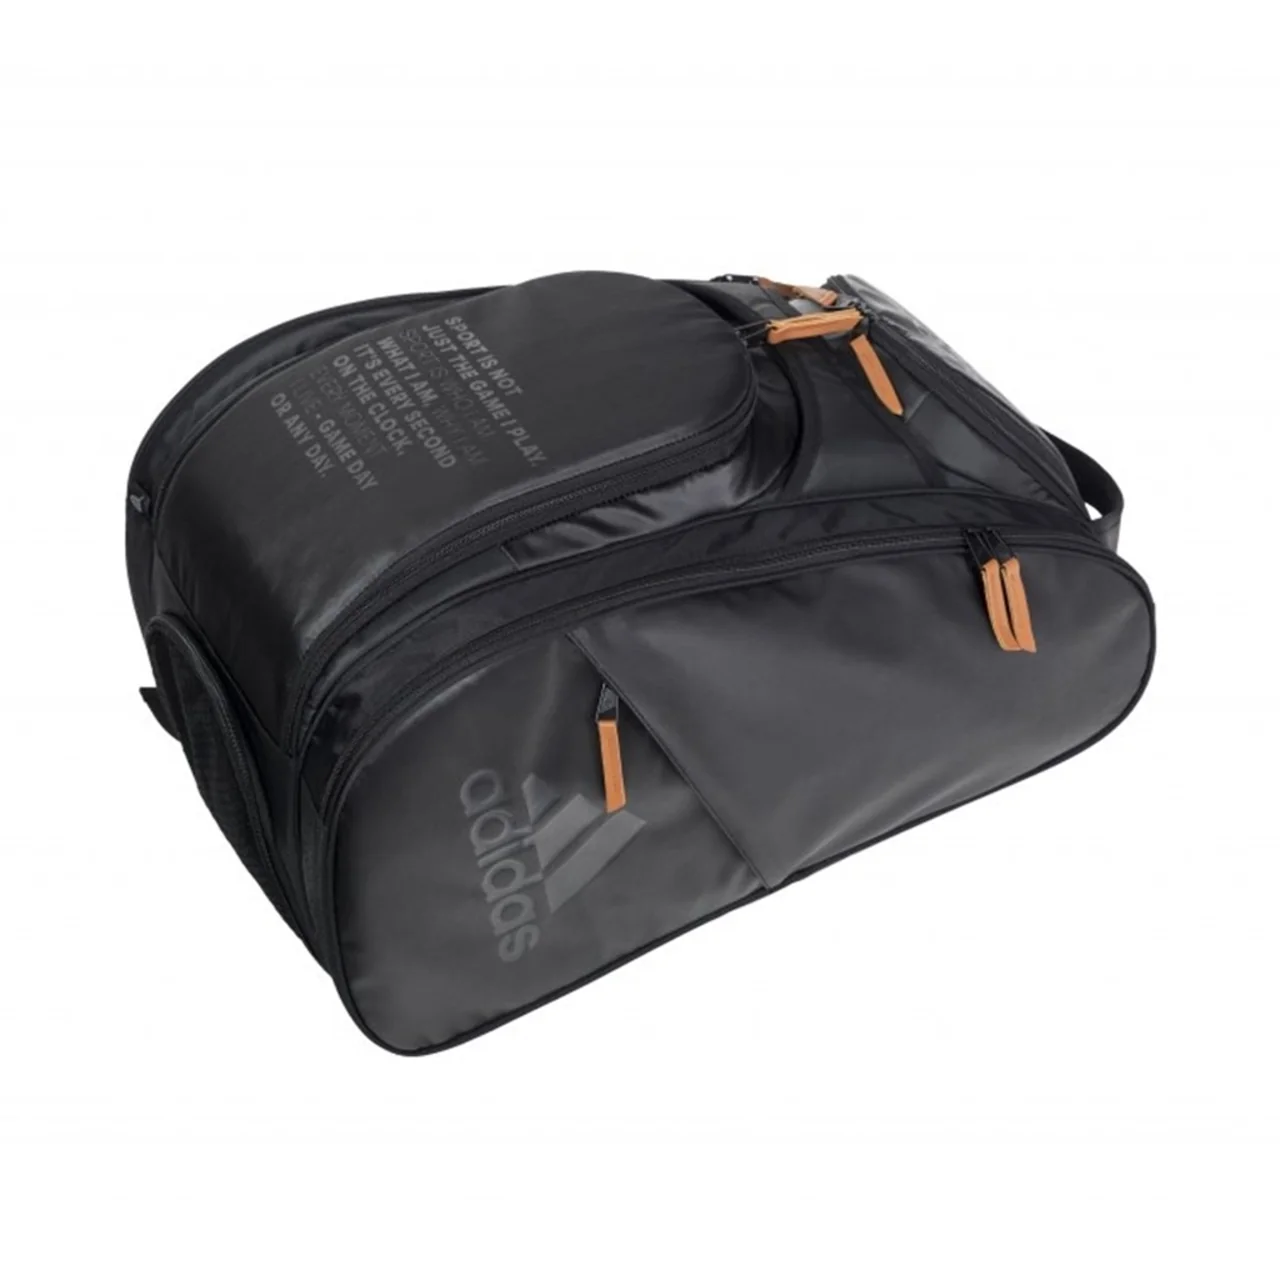 Adidas Racket Bag Multigame/Padel Black